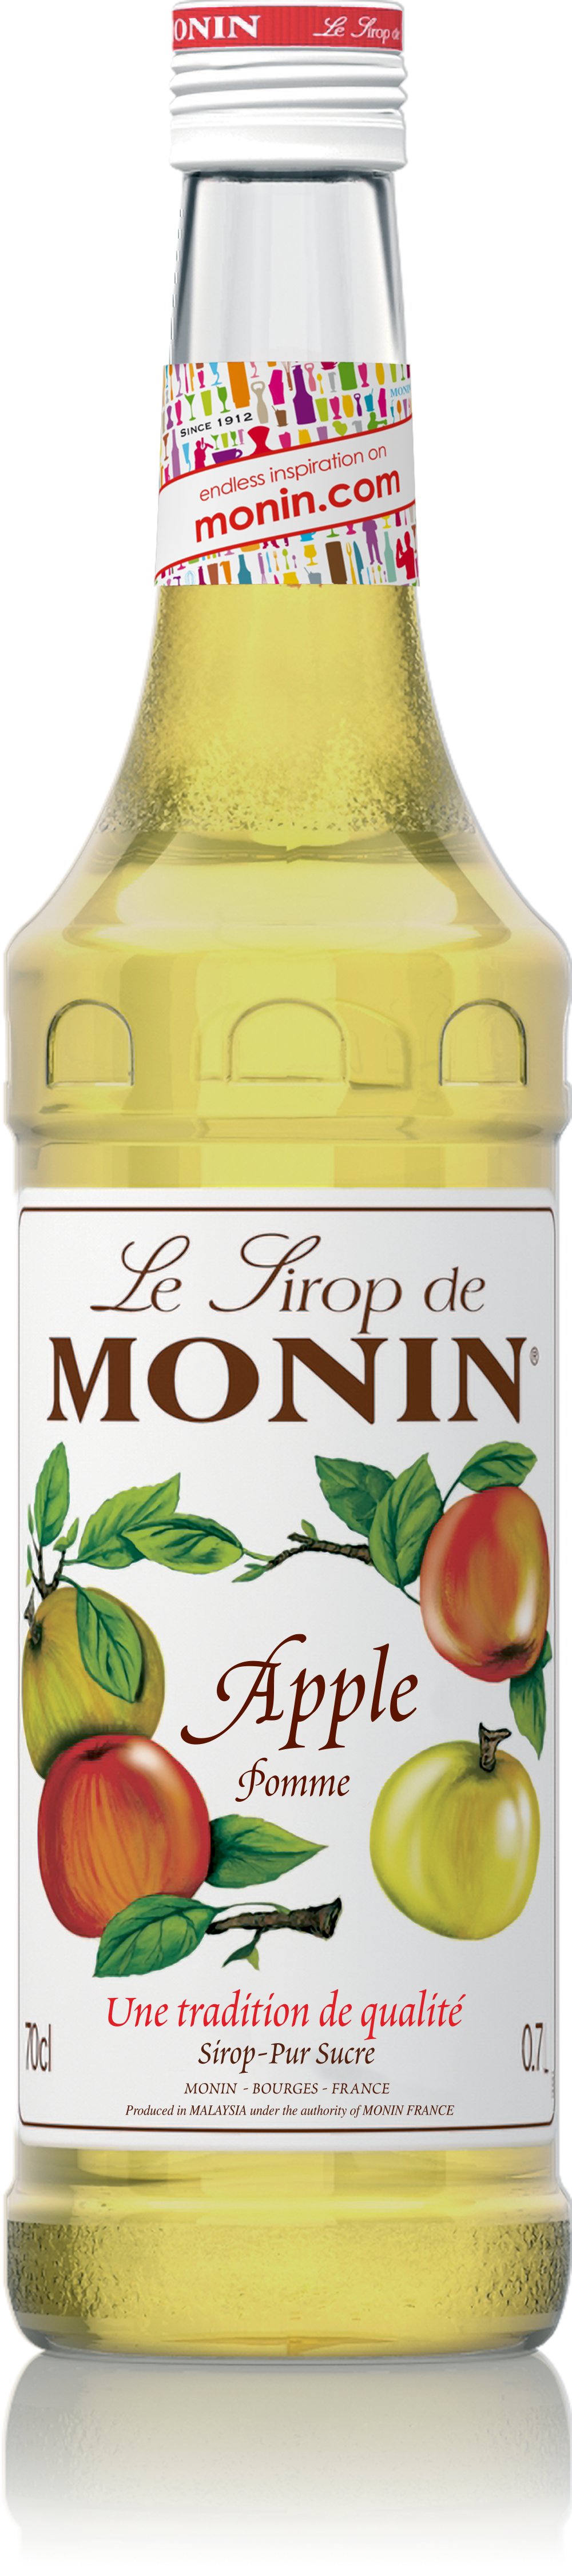 Le Sirop de MONIN Apple